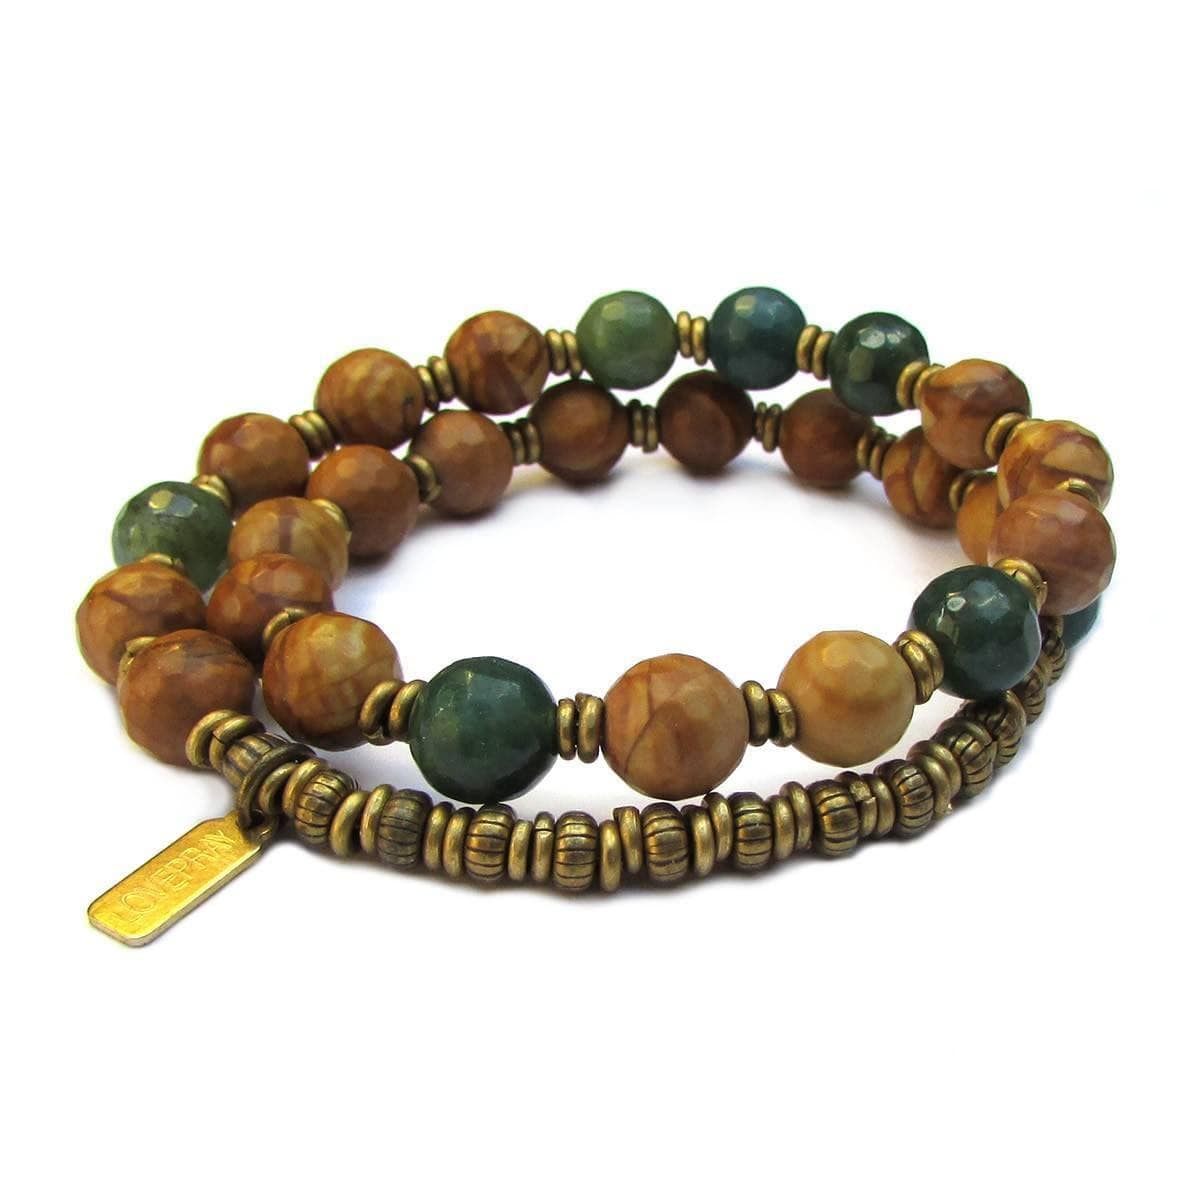 Bracelets - "Abundance And Protection" 27 Bead Wrap Mala Bracelet, Moss Agate And Jasper